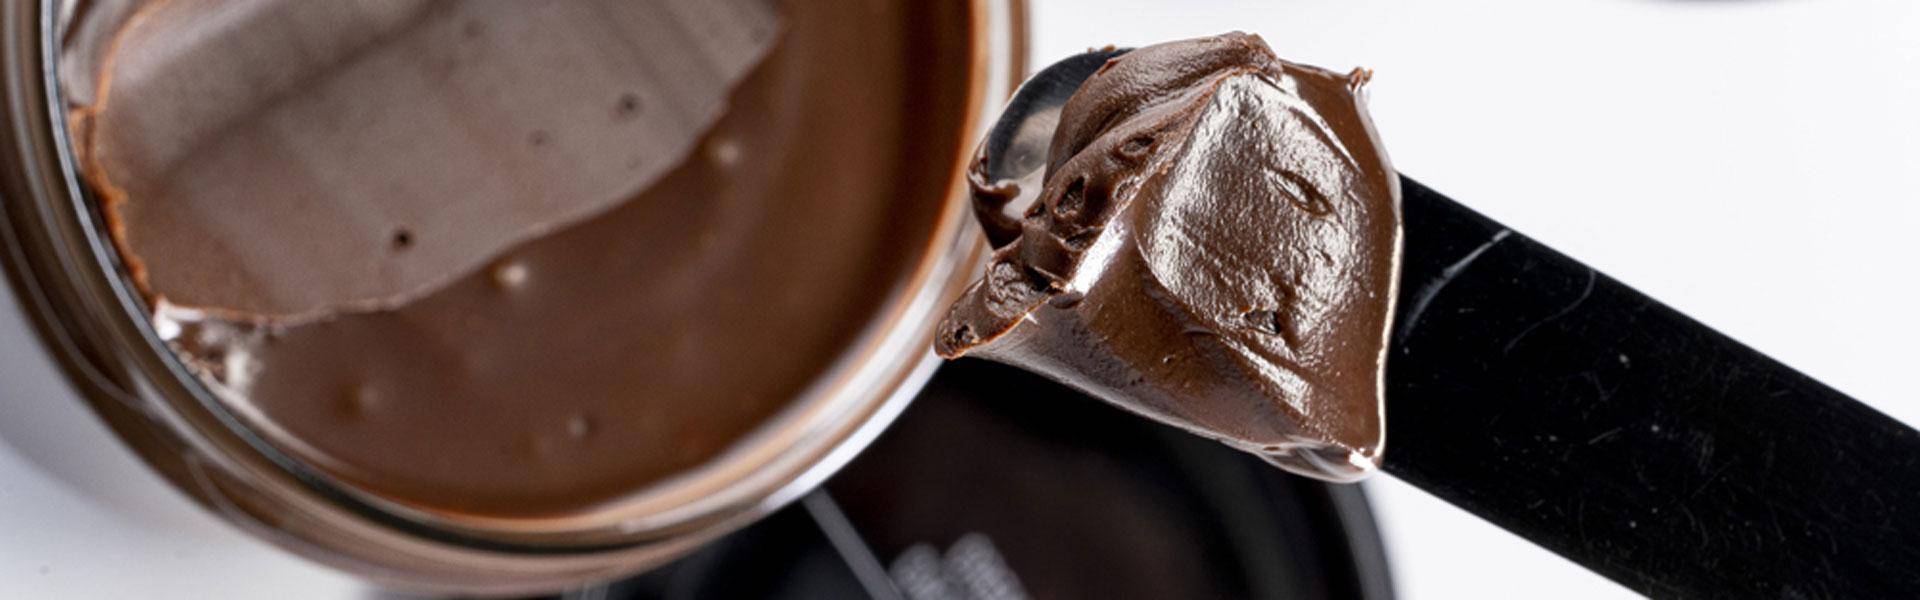 cacao barry chocolate spread